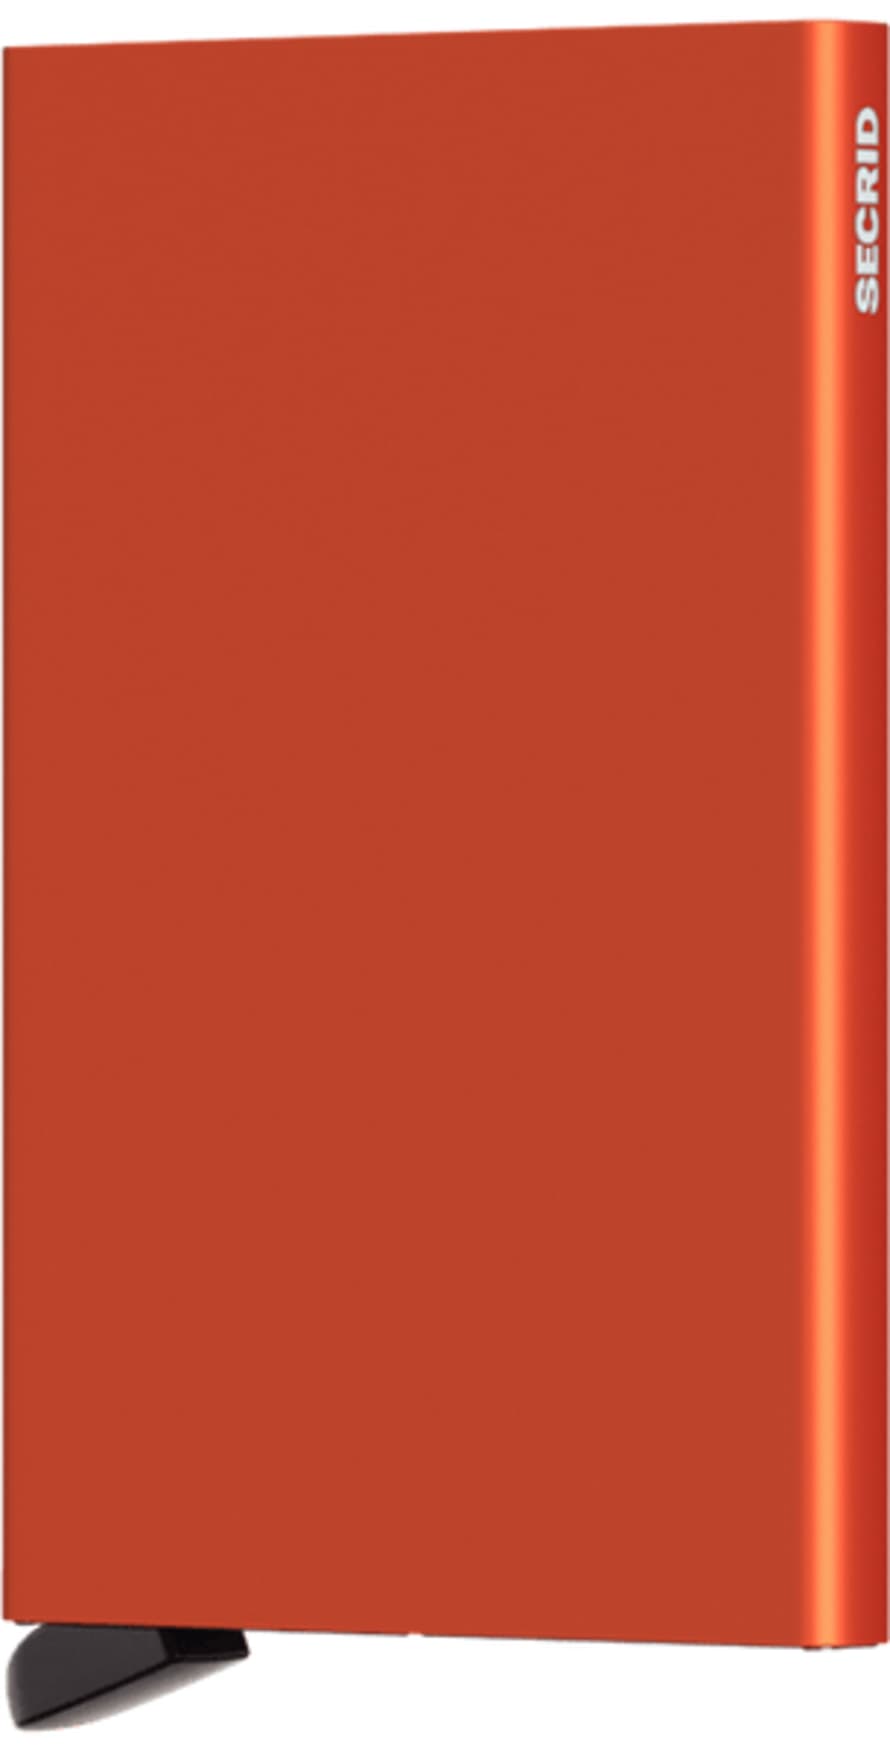 Secrid Orange Card Protector